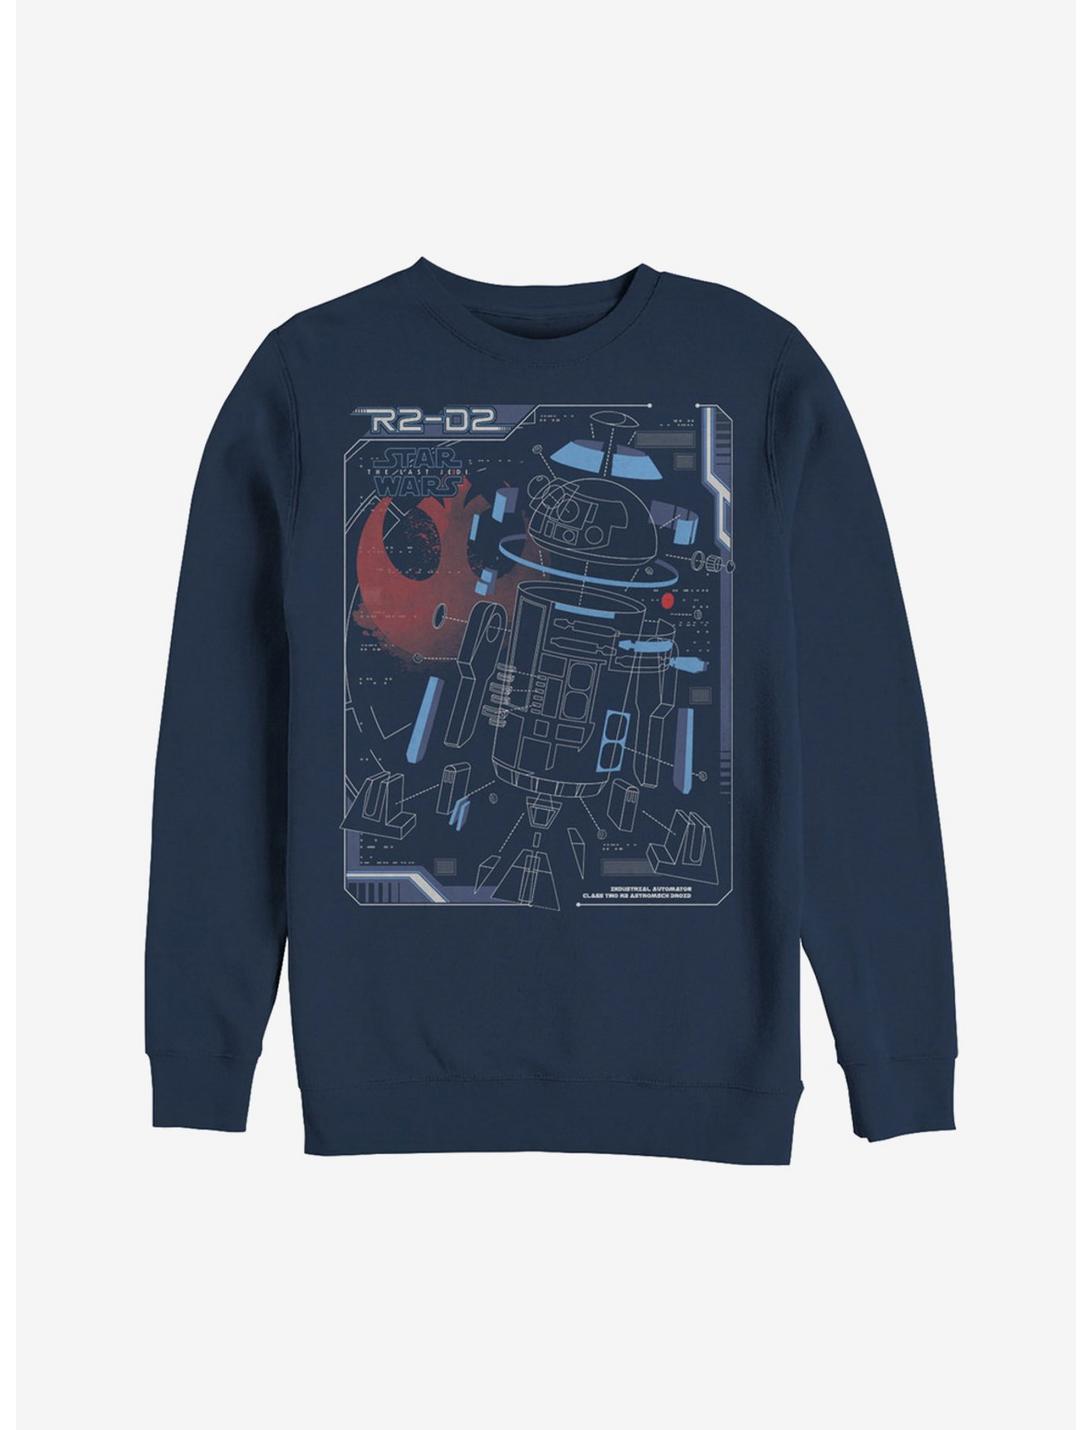 Star Wars R2-D2 Deconstruct Sweatshirt, NAVY, hi-res